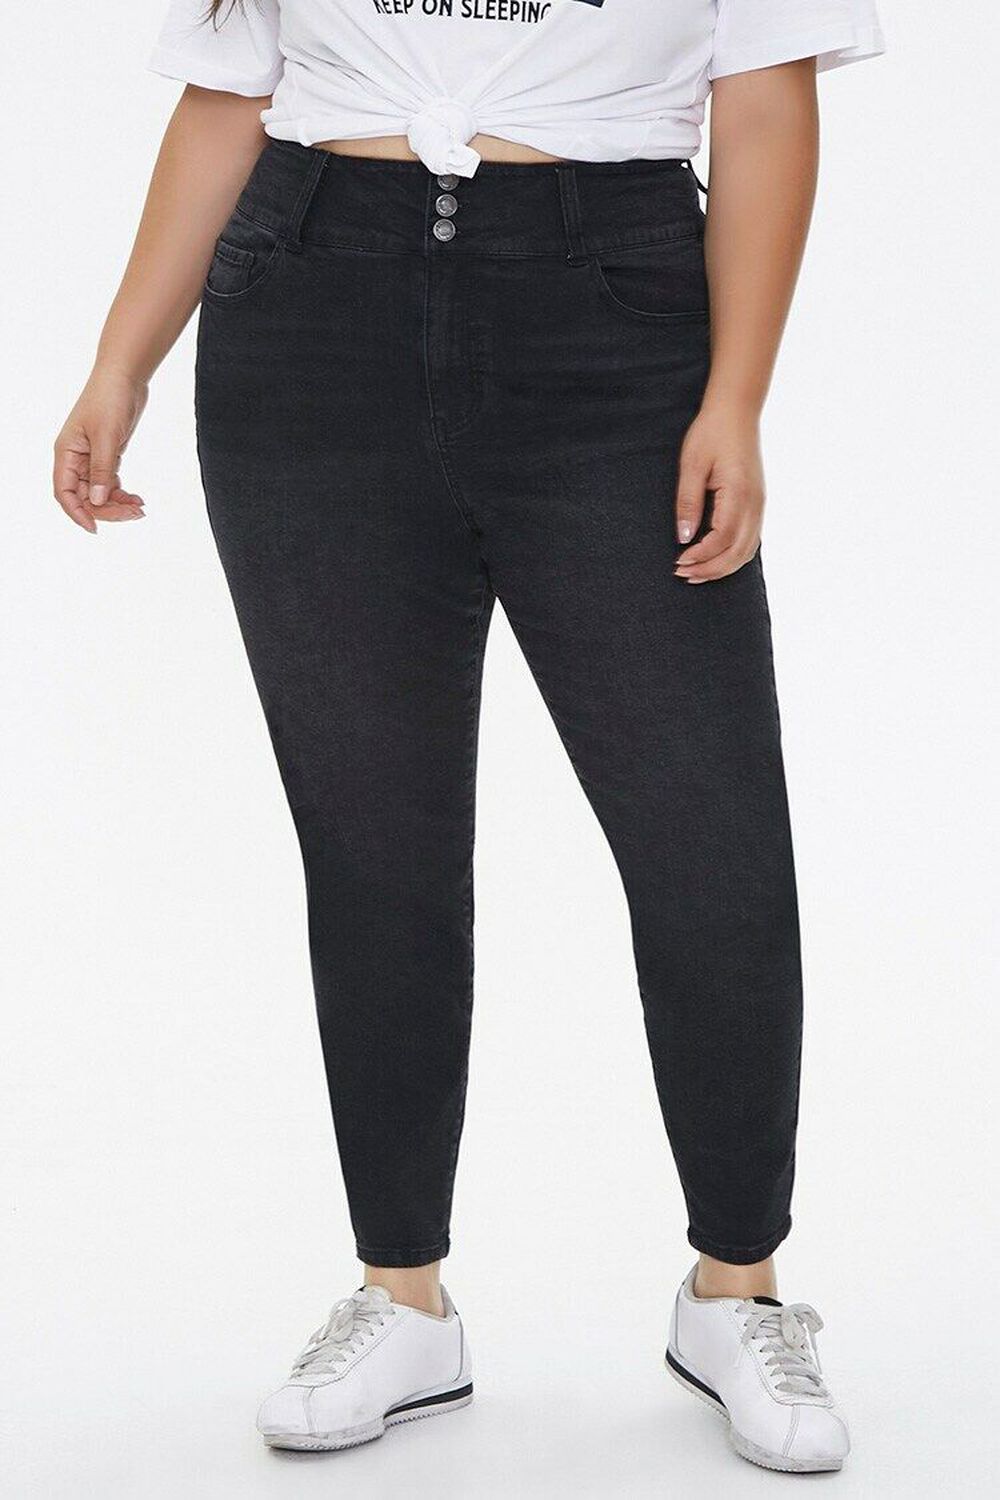 BLACK Plus Size Curvy-Fit Skinny Jeans, image 2